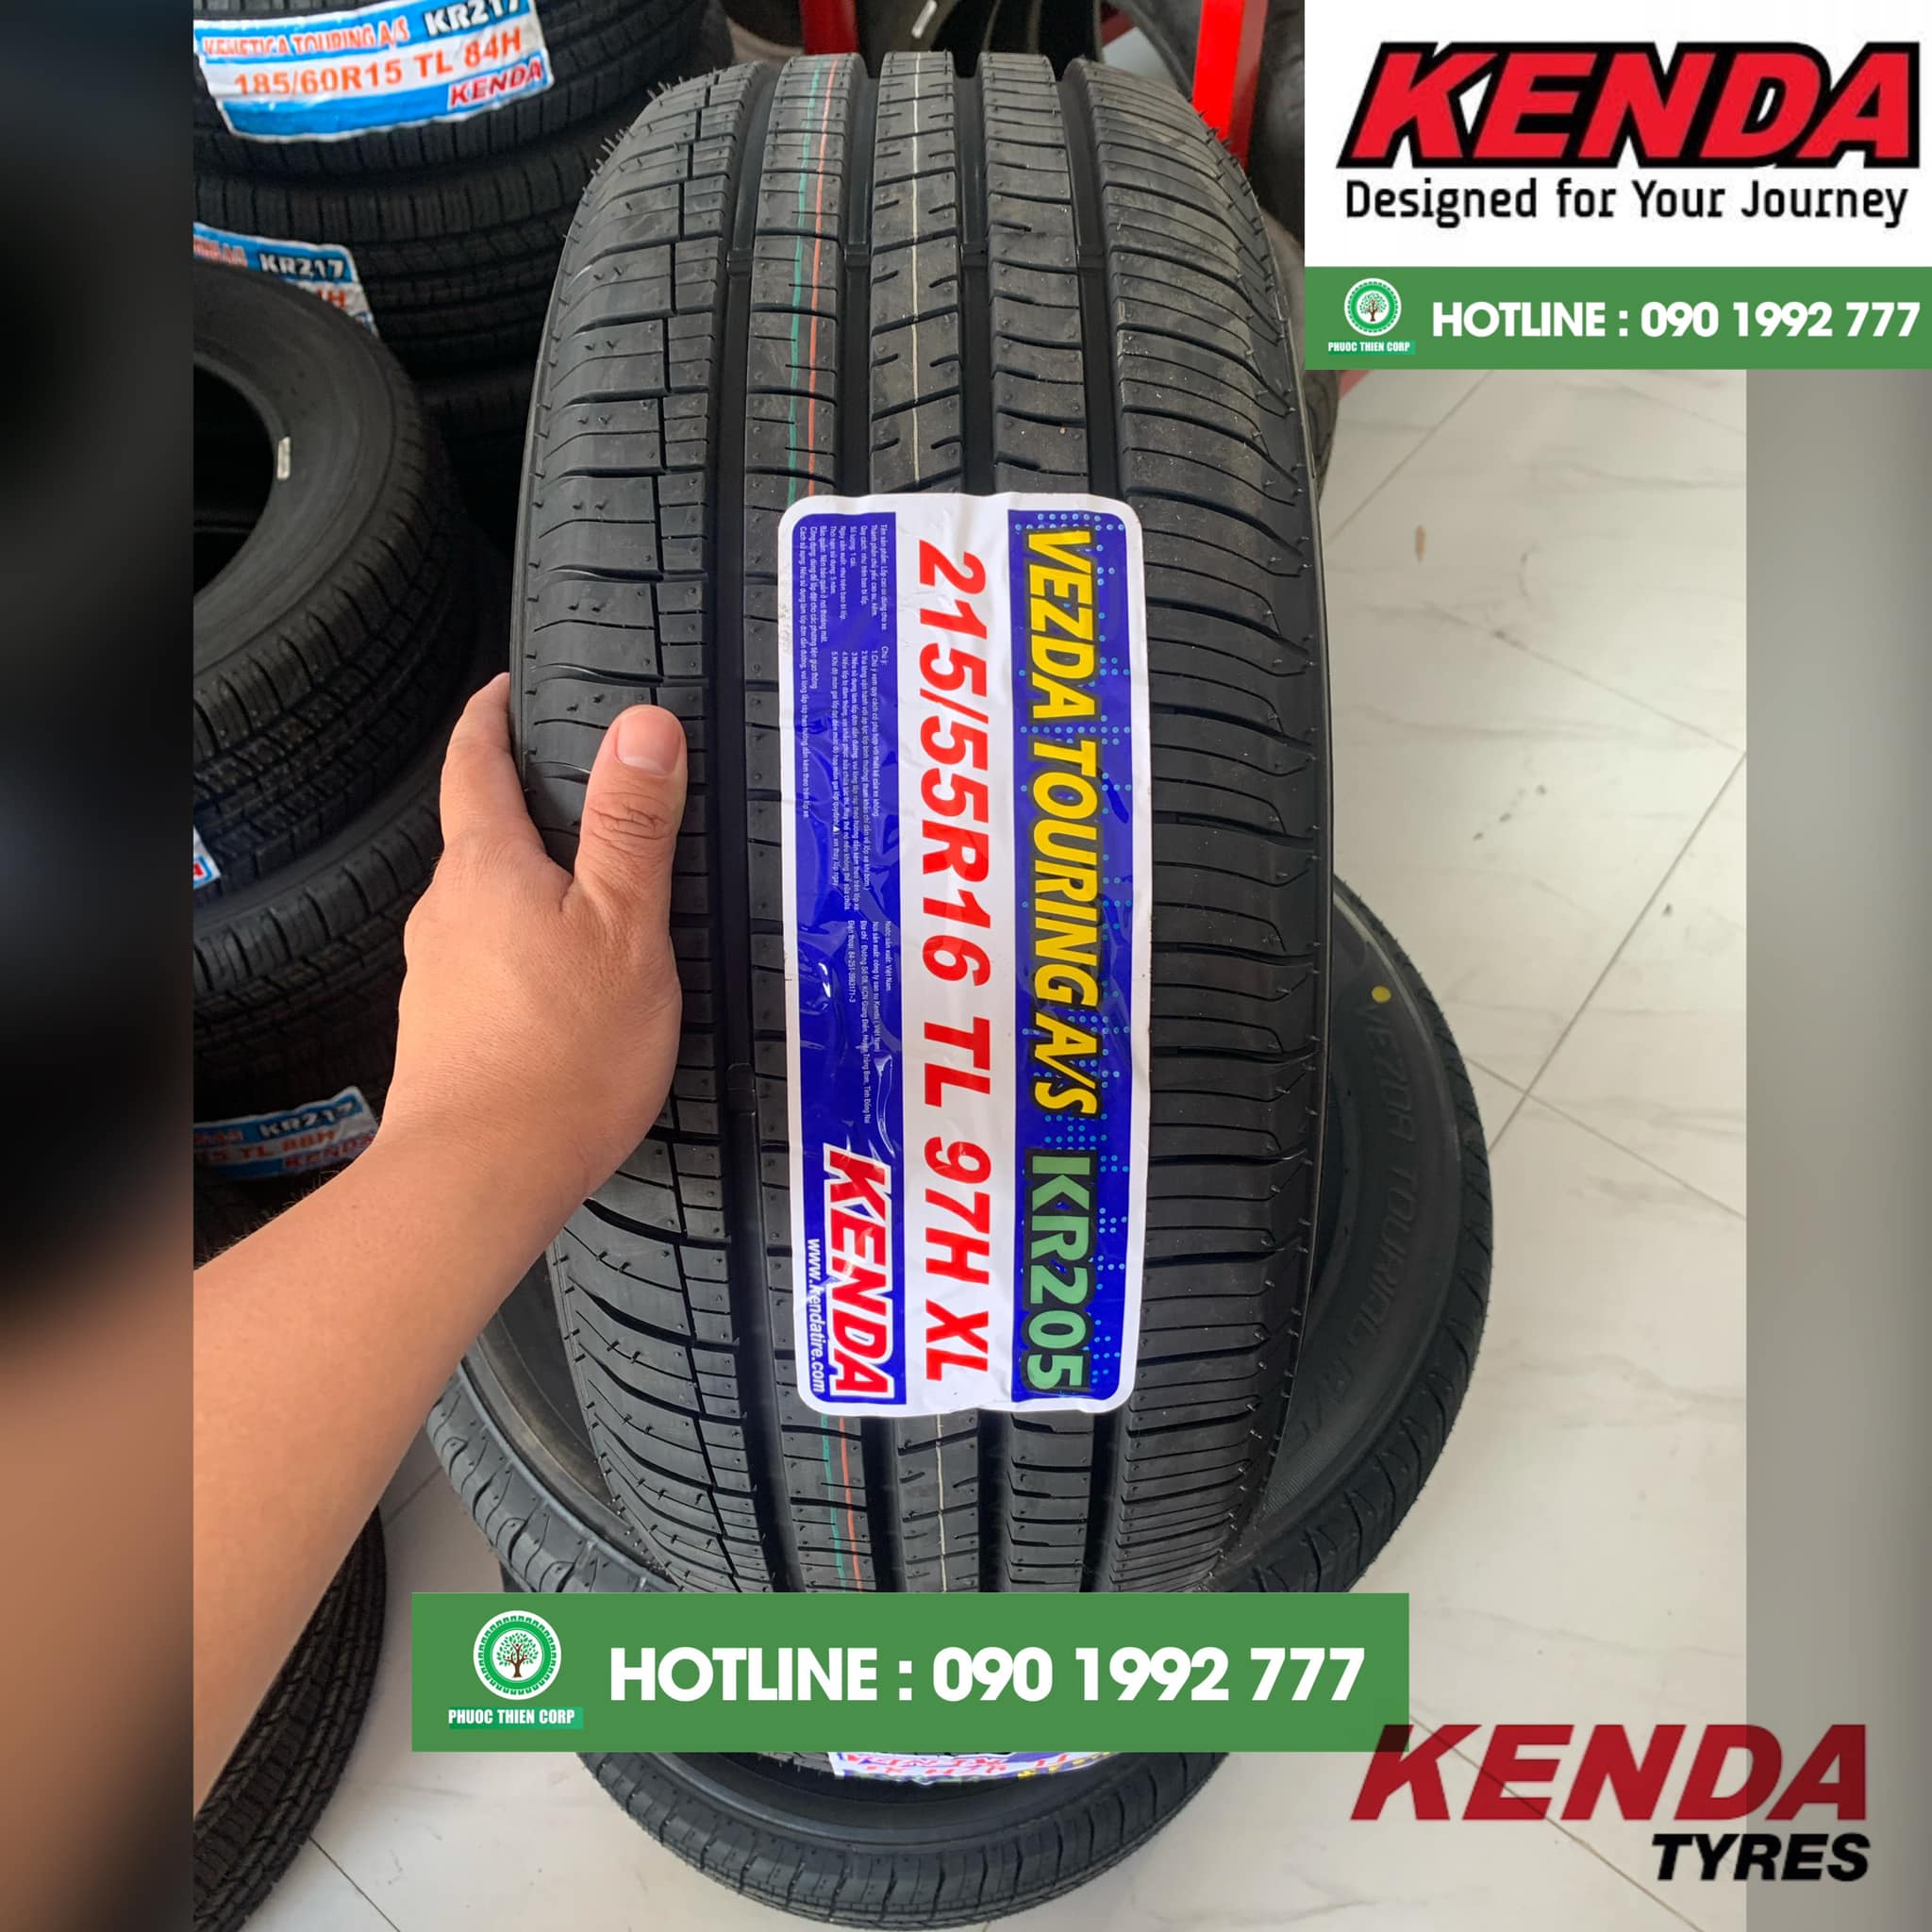 Gợi ý : Thay lốp 215/55R16 KENDA cho xe Honda Civic